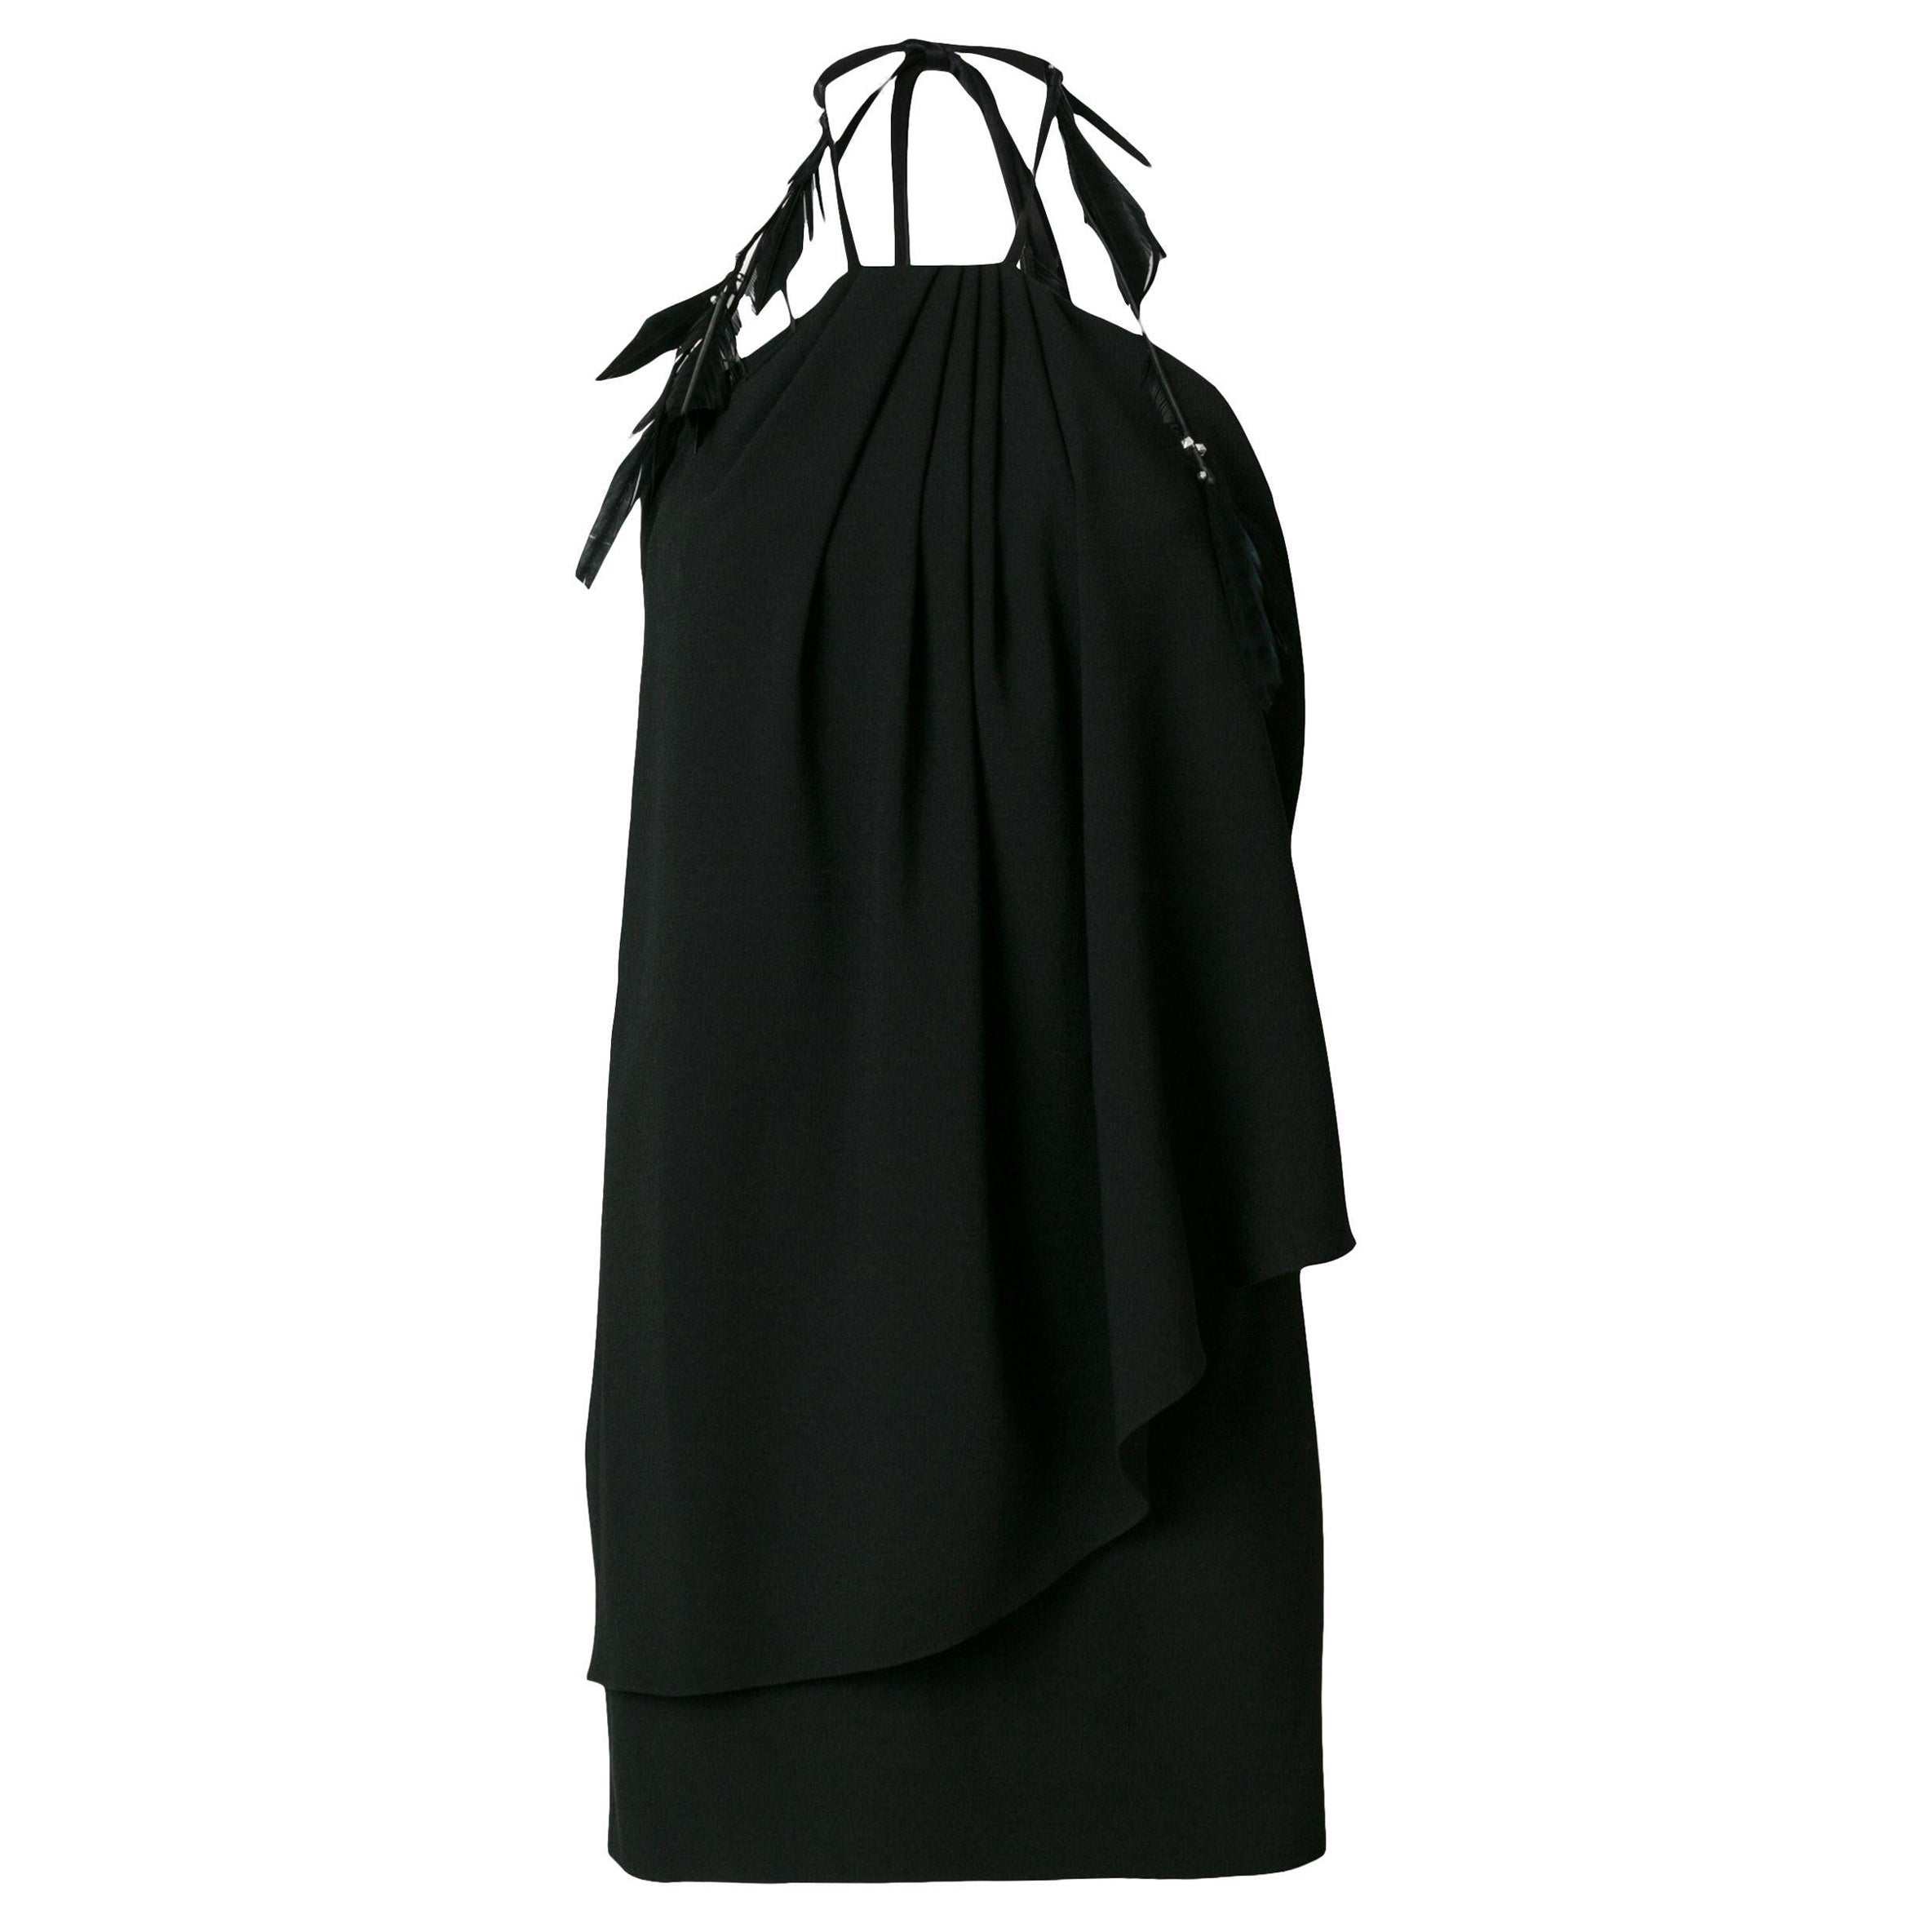 Saint Laurent Black Mini Halter Silk Crepe Dress Size 38 